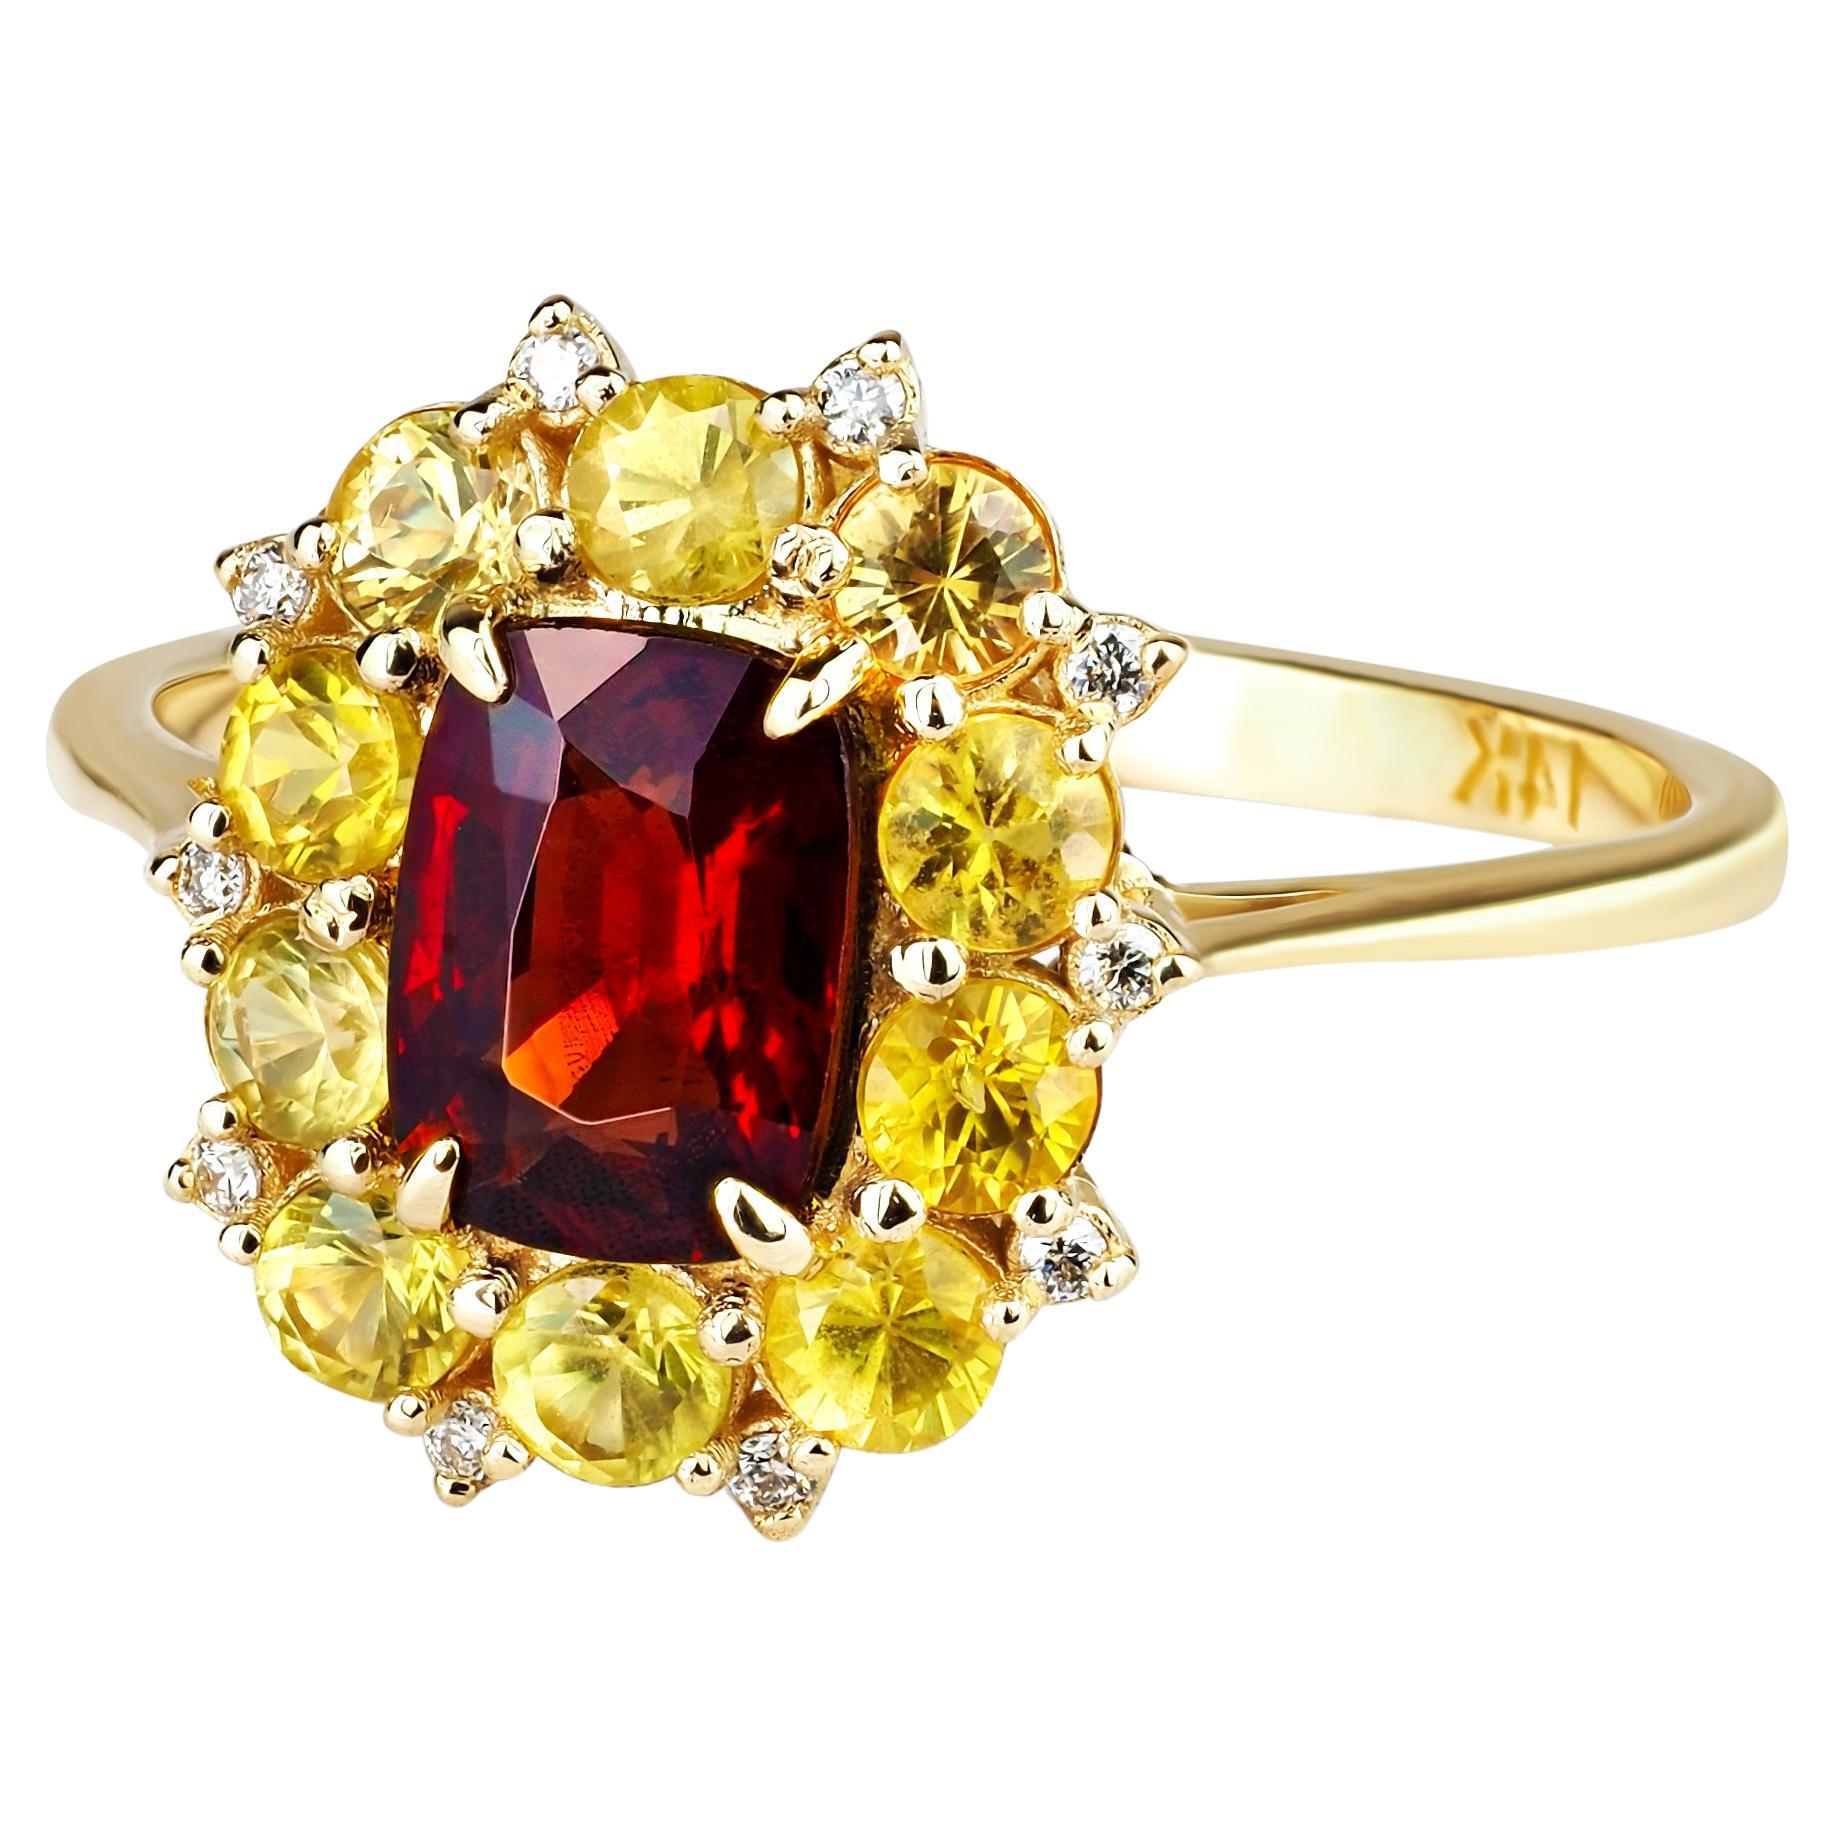 Red garnet, yellow sapphires gold ring. 